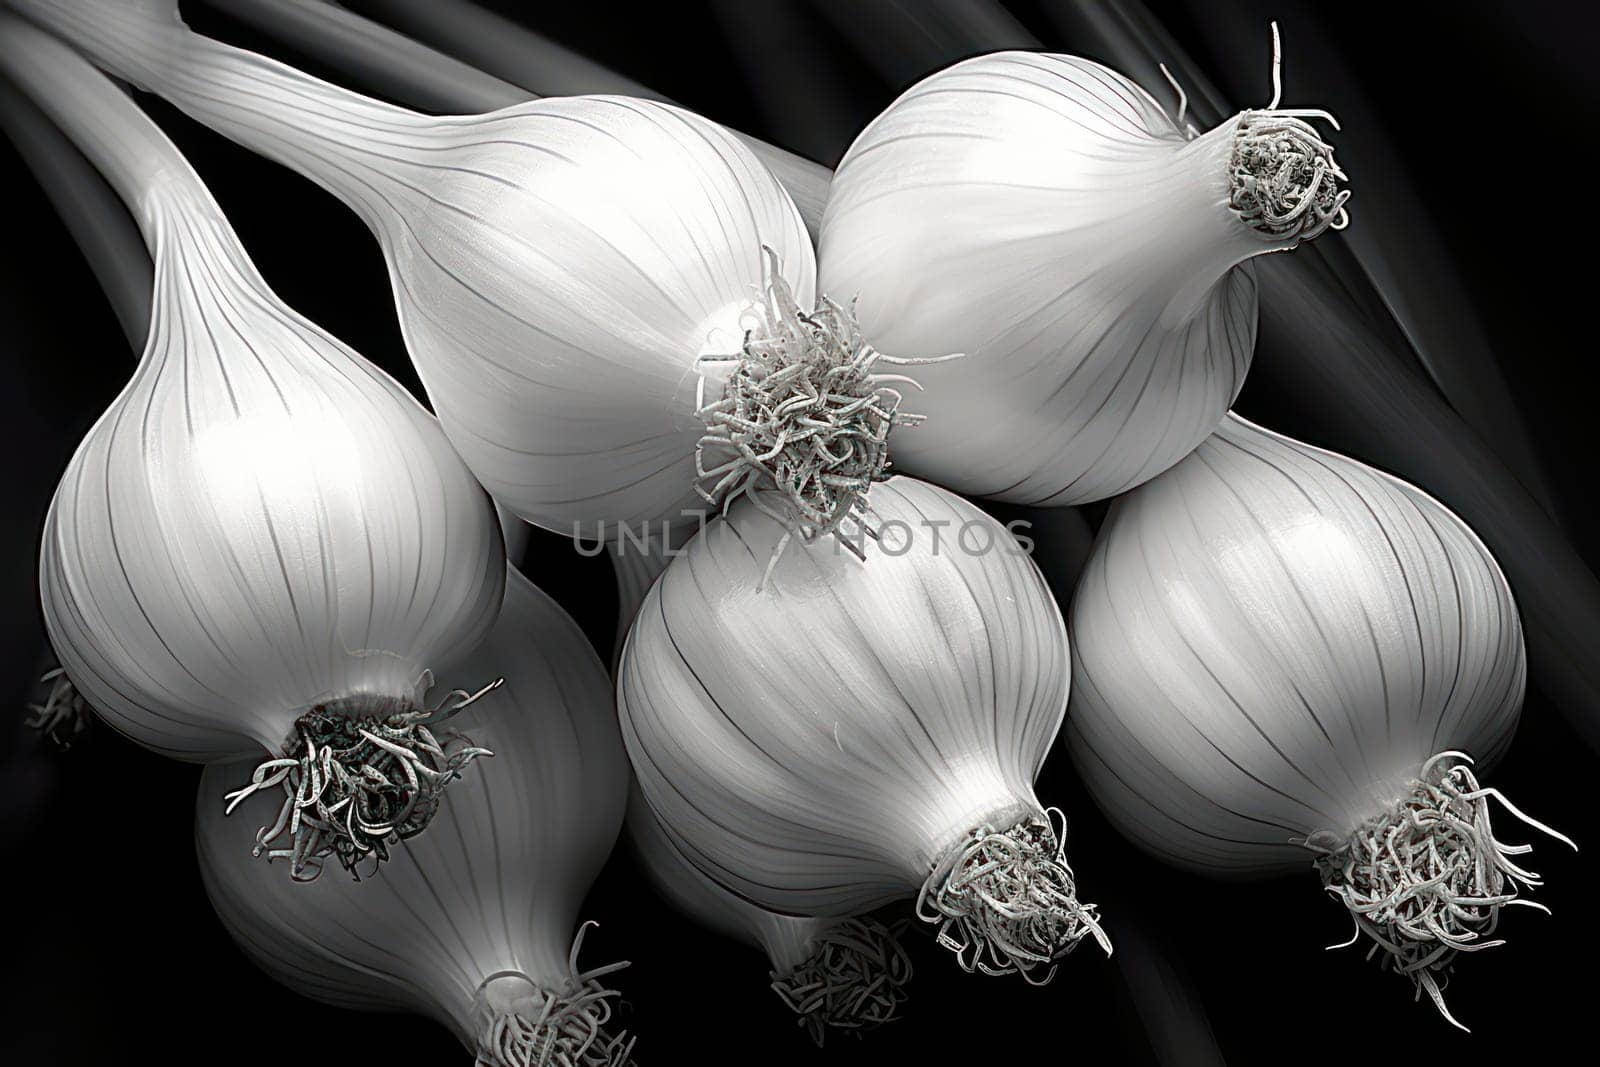 Fresh Organic Garlic Bulb, Aromatic Ingredient on Wooden Background by Vichizh